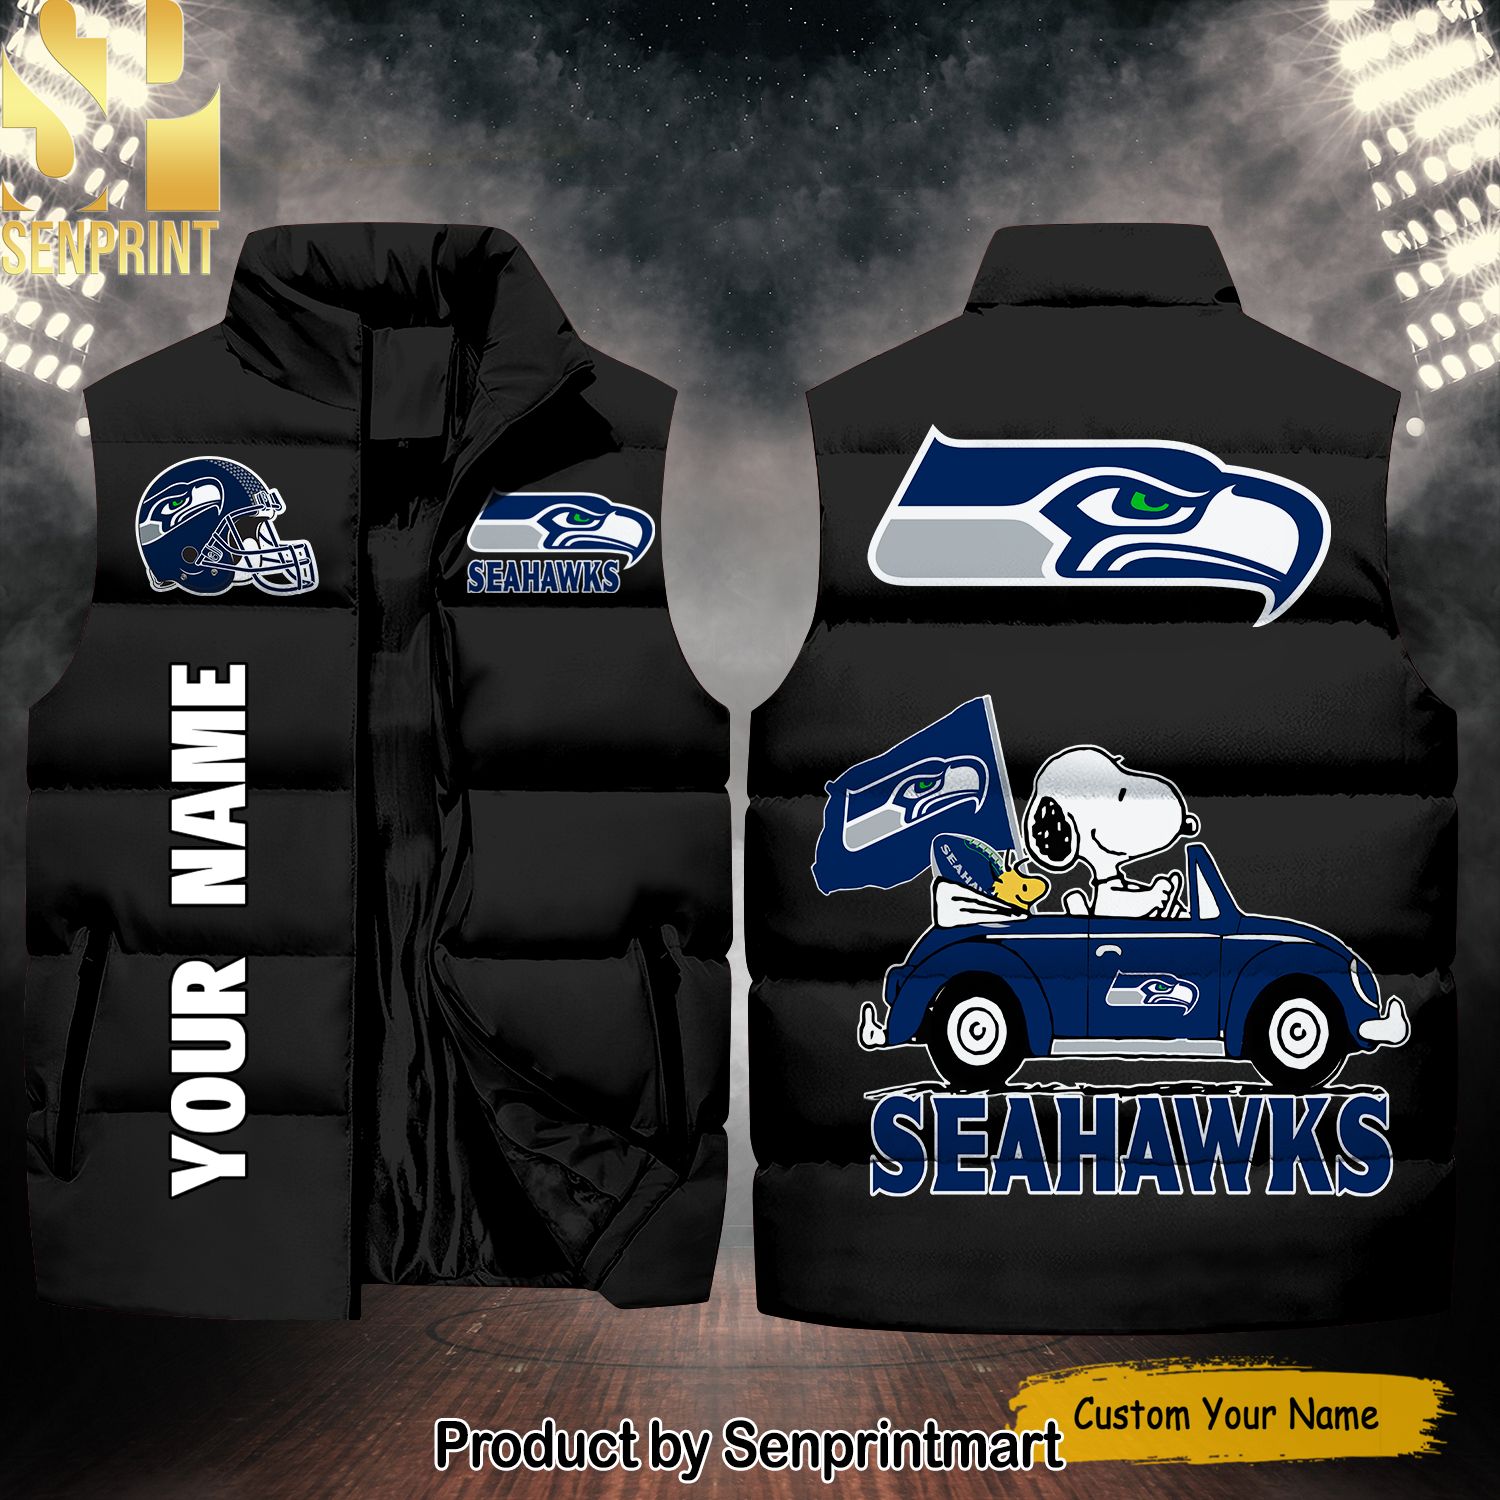 National Football League Seattle Seahawks Peanuts Snoopy Hot Outfit Sleeveless Jacket